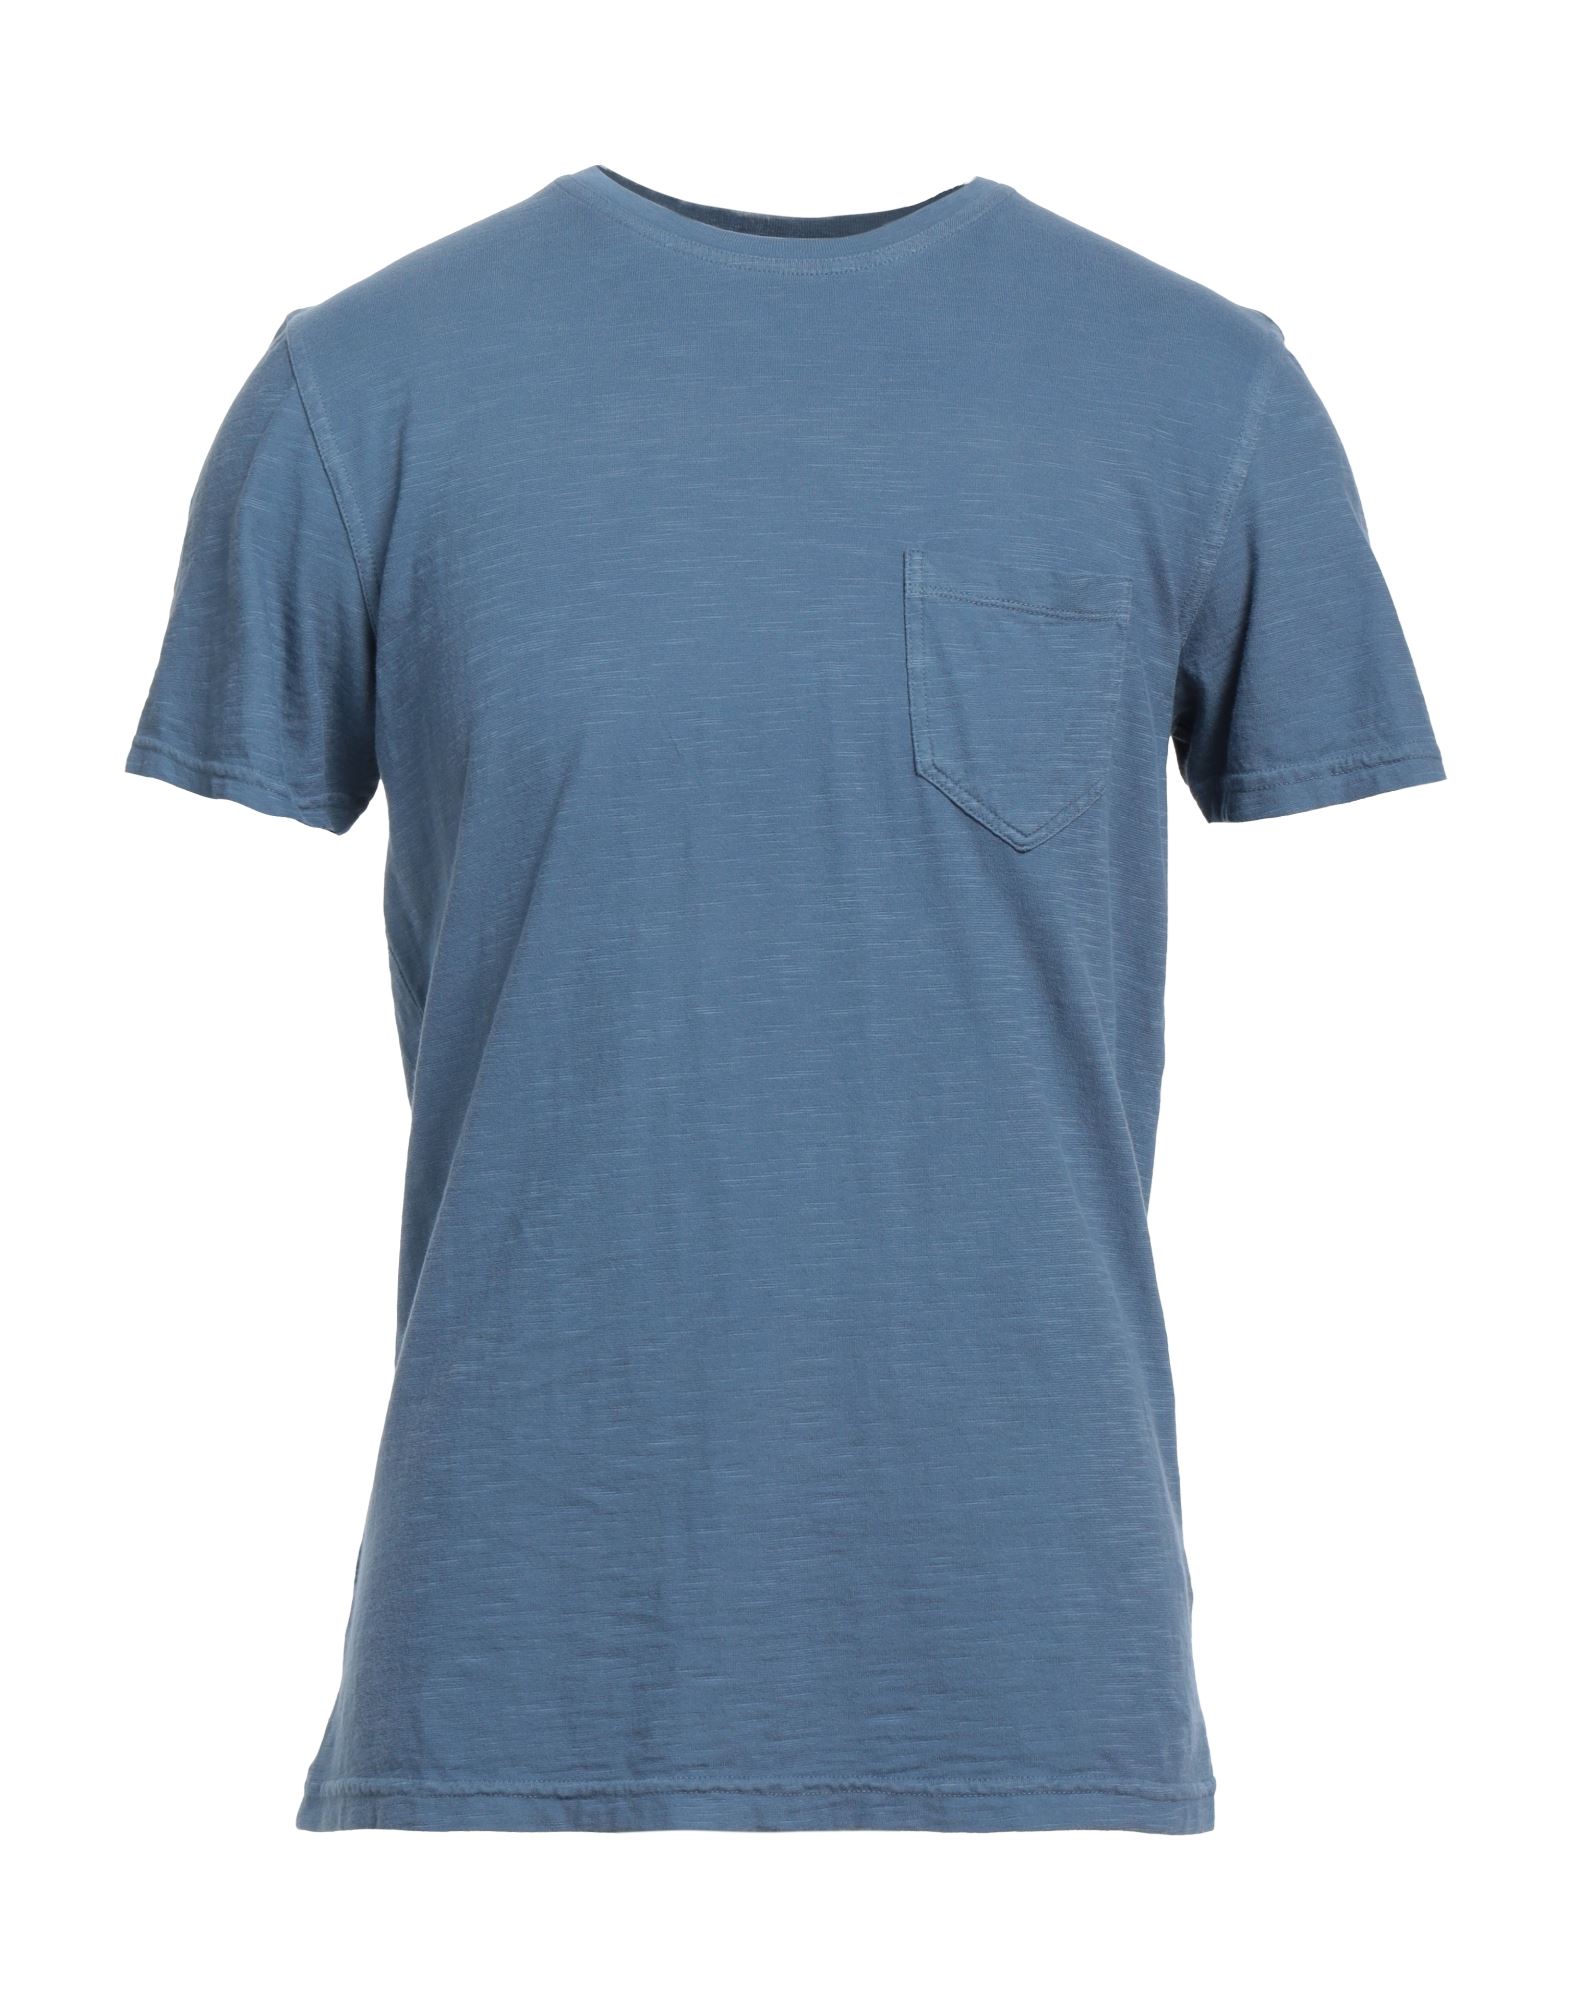 Bl'ker Man T-shirt Pastel Blue Size L Cotton